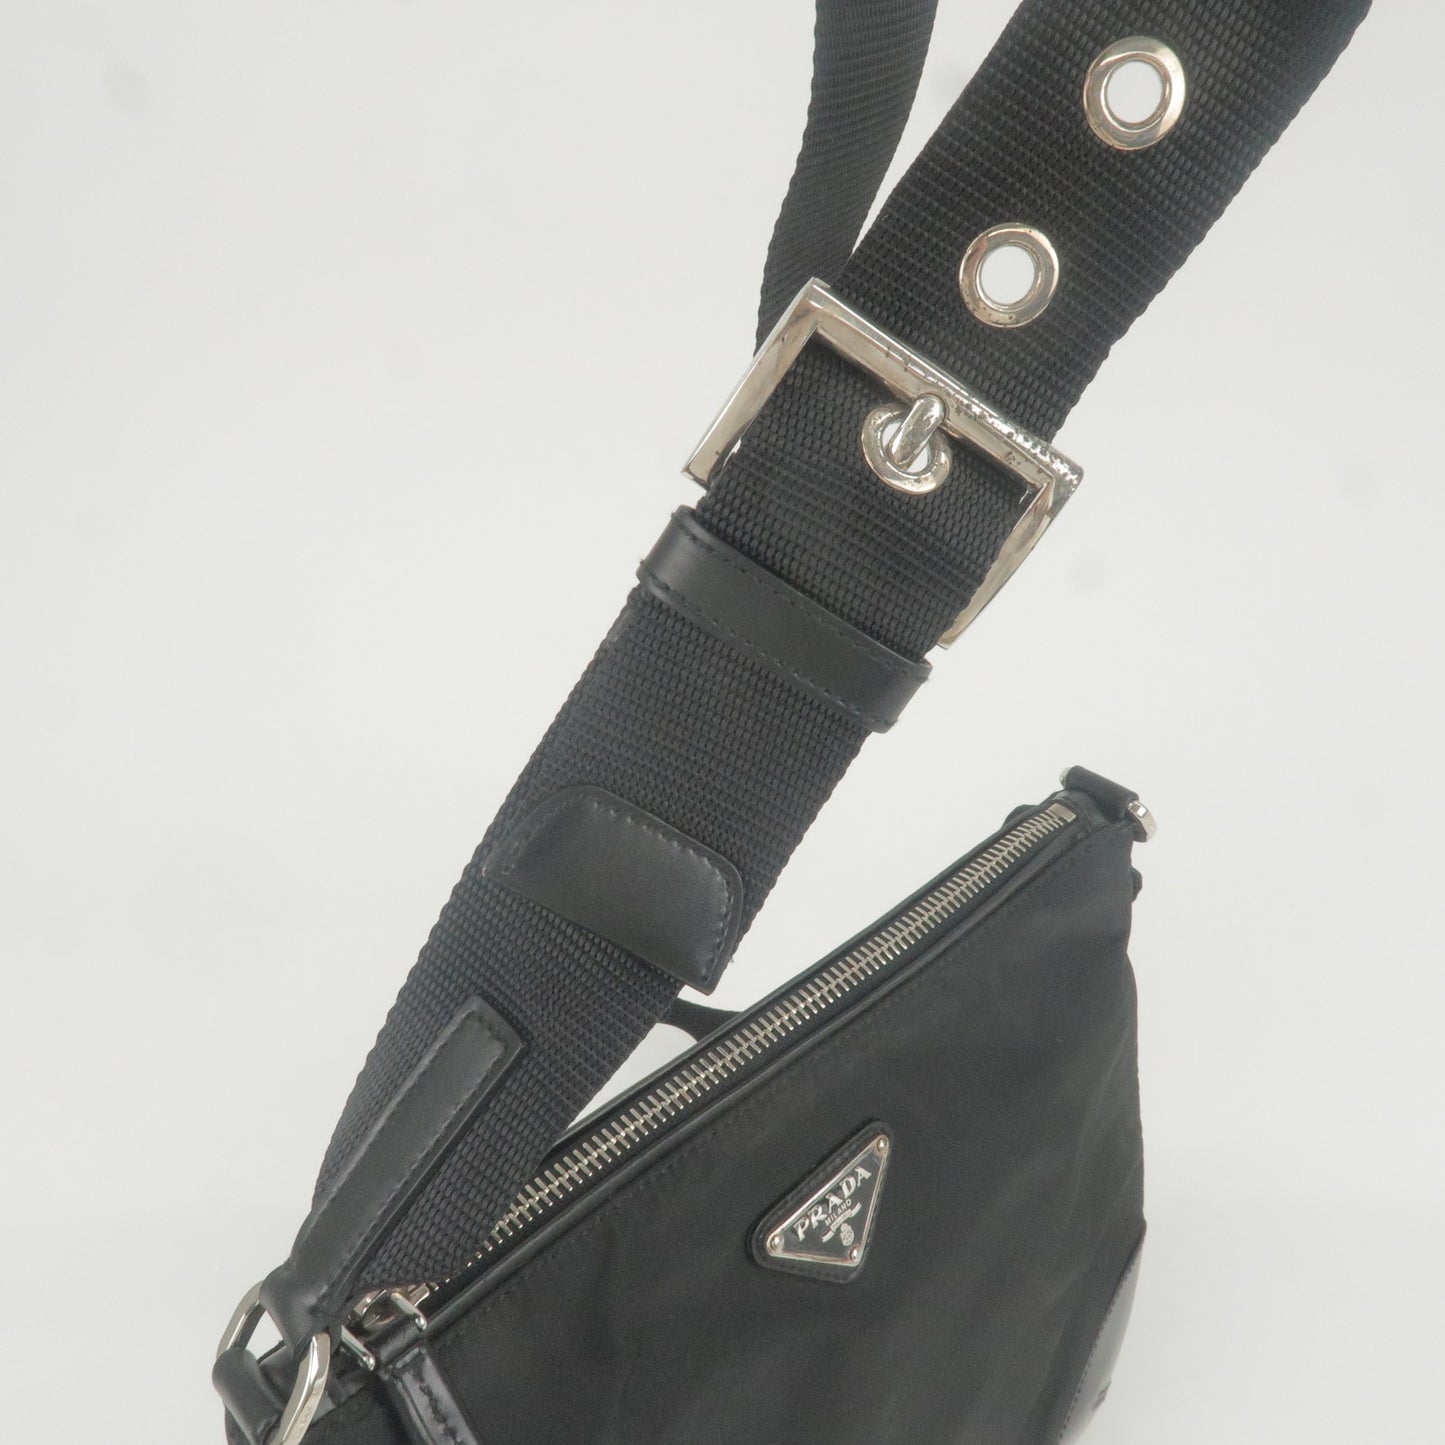 PRADA Logo Nylon Leather Shoulder Bag Purse NERO Black BT0332